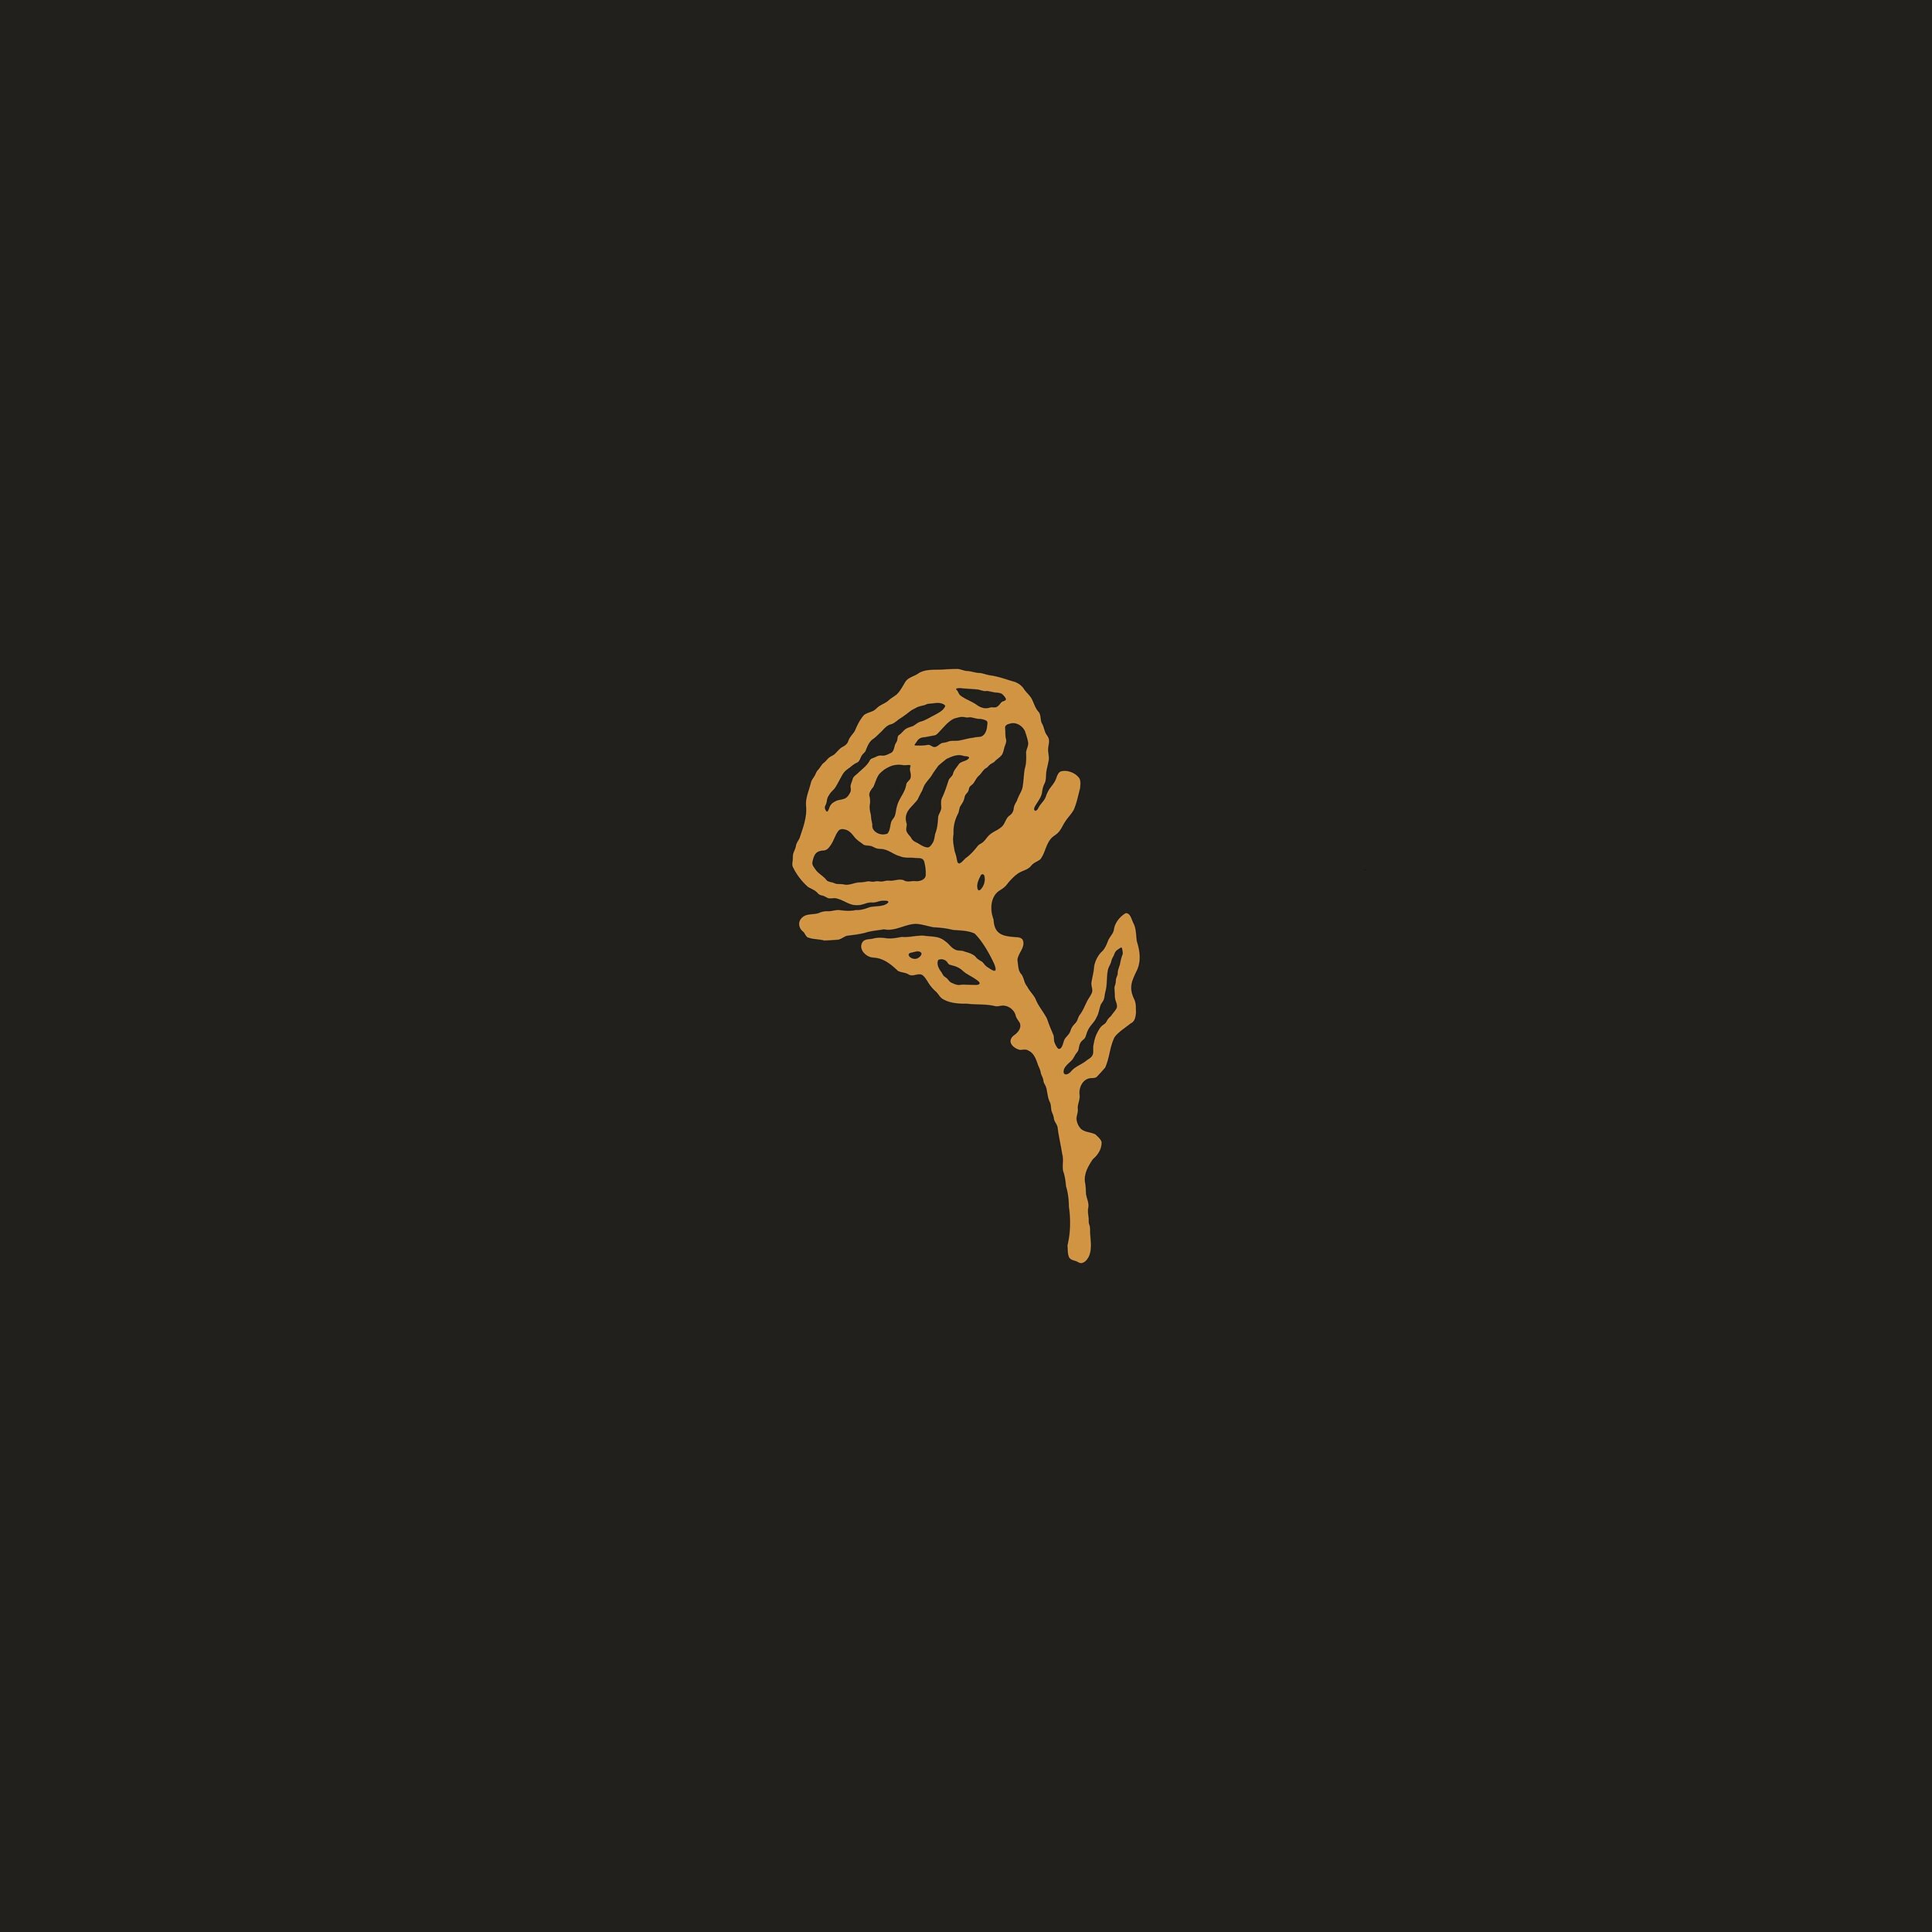 Little yellow rose morning doodle 

#logomark #logodesign #illustrator #illustrationwork